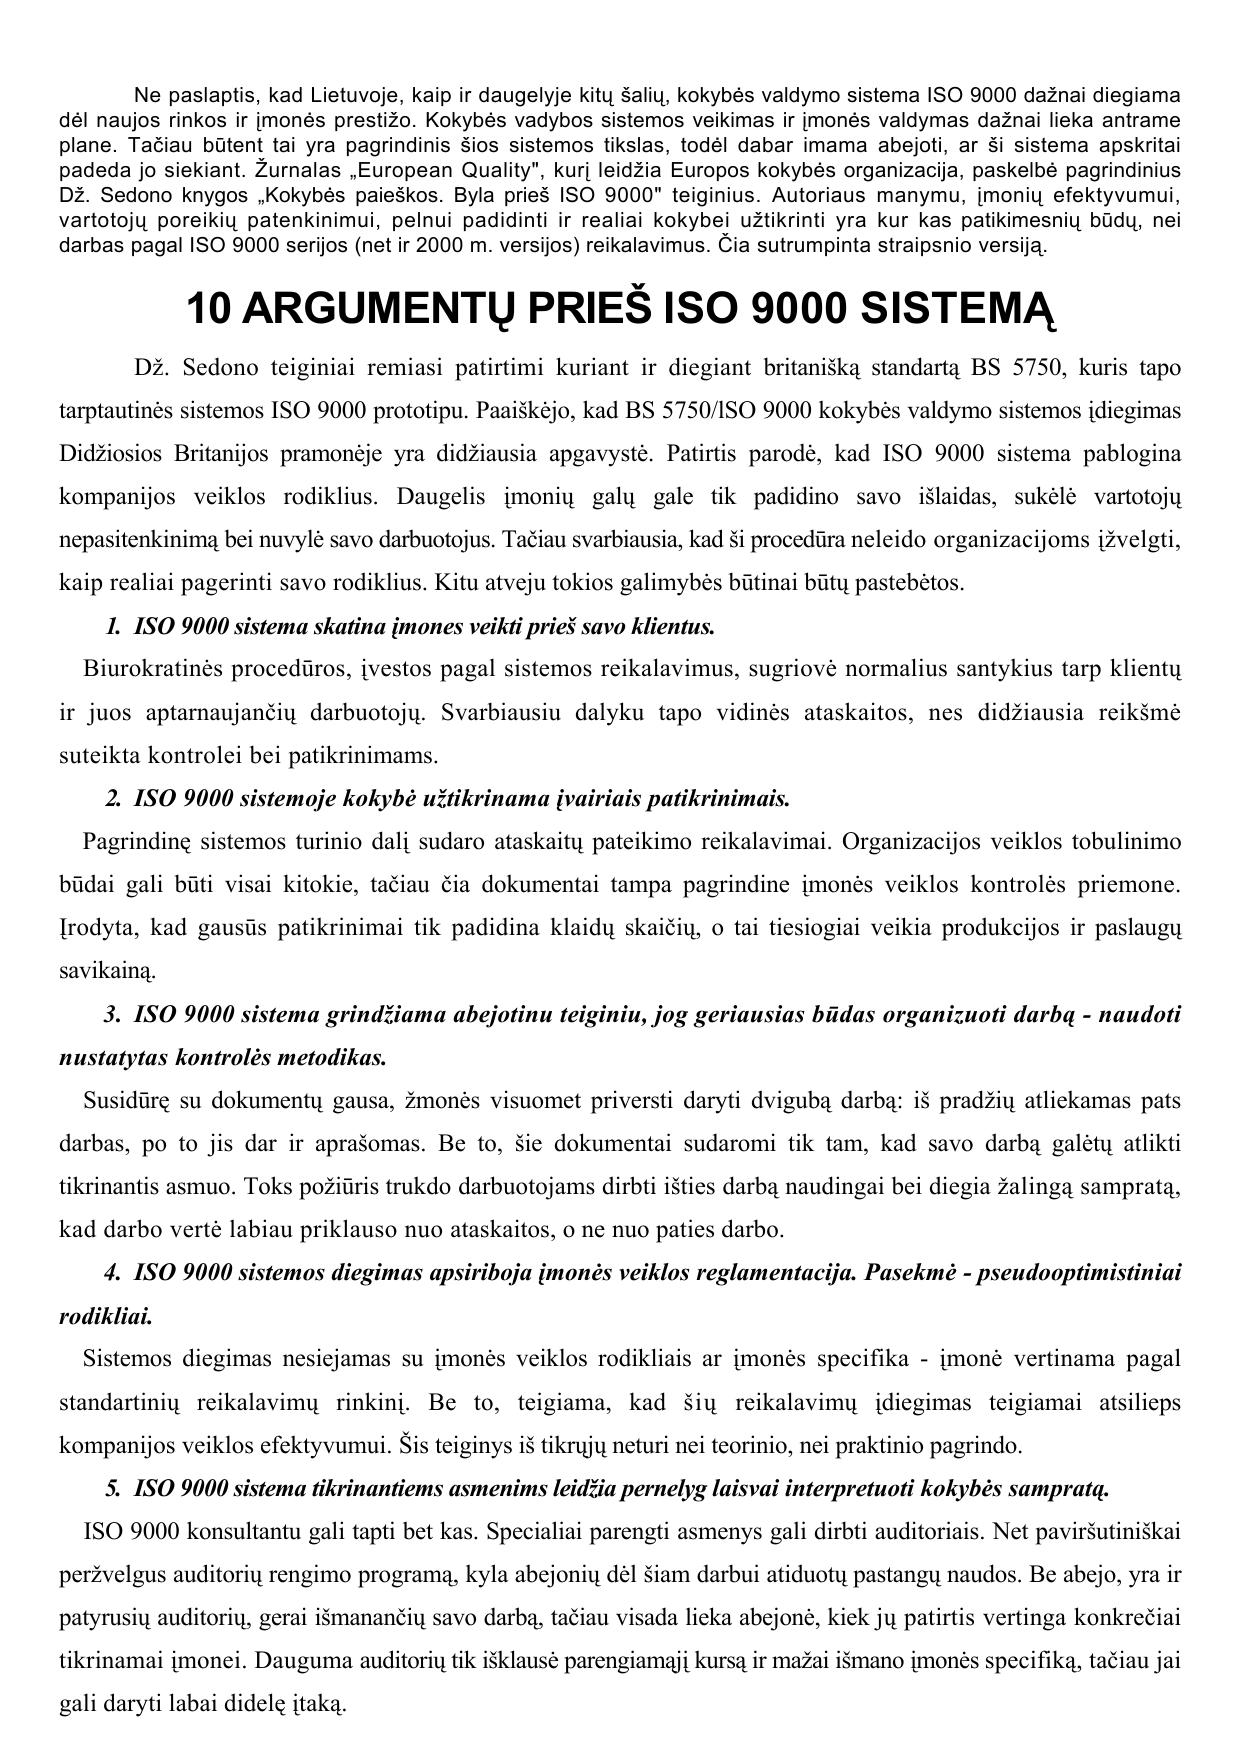 Microsoft Word - 10 argumentu pries ISO 9000 sistema.doc